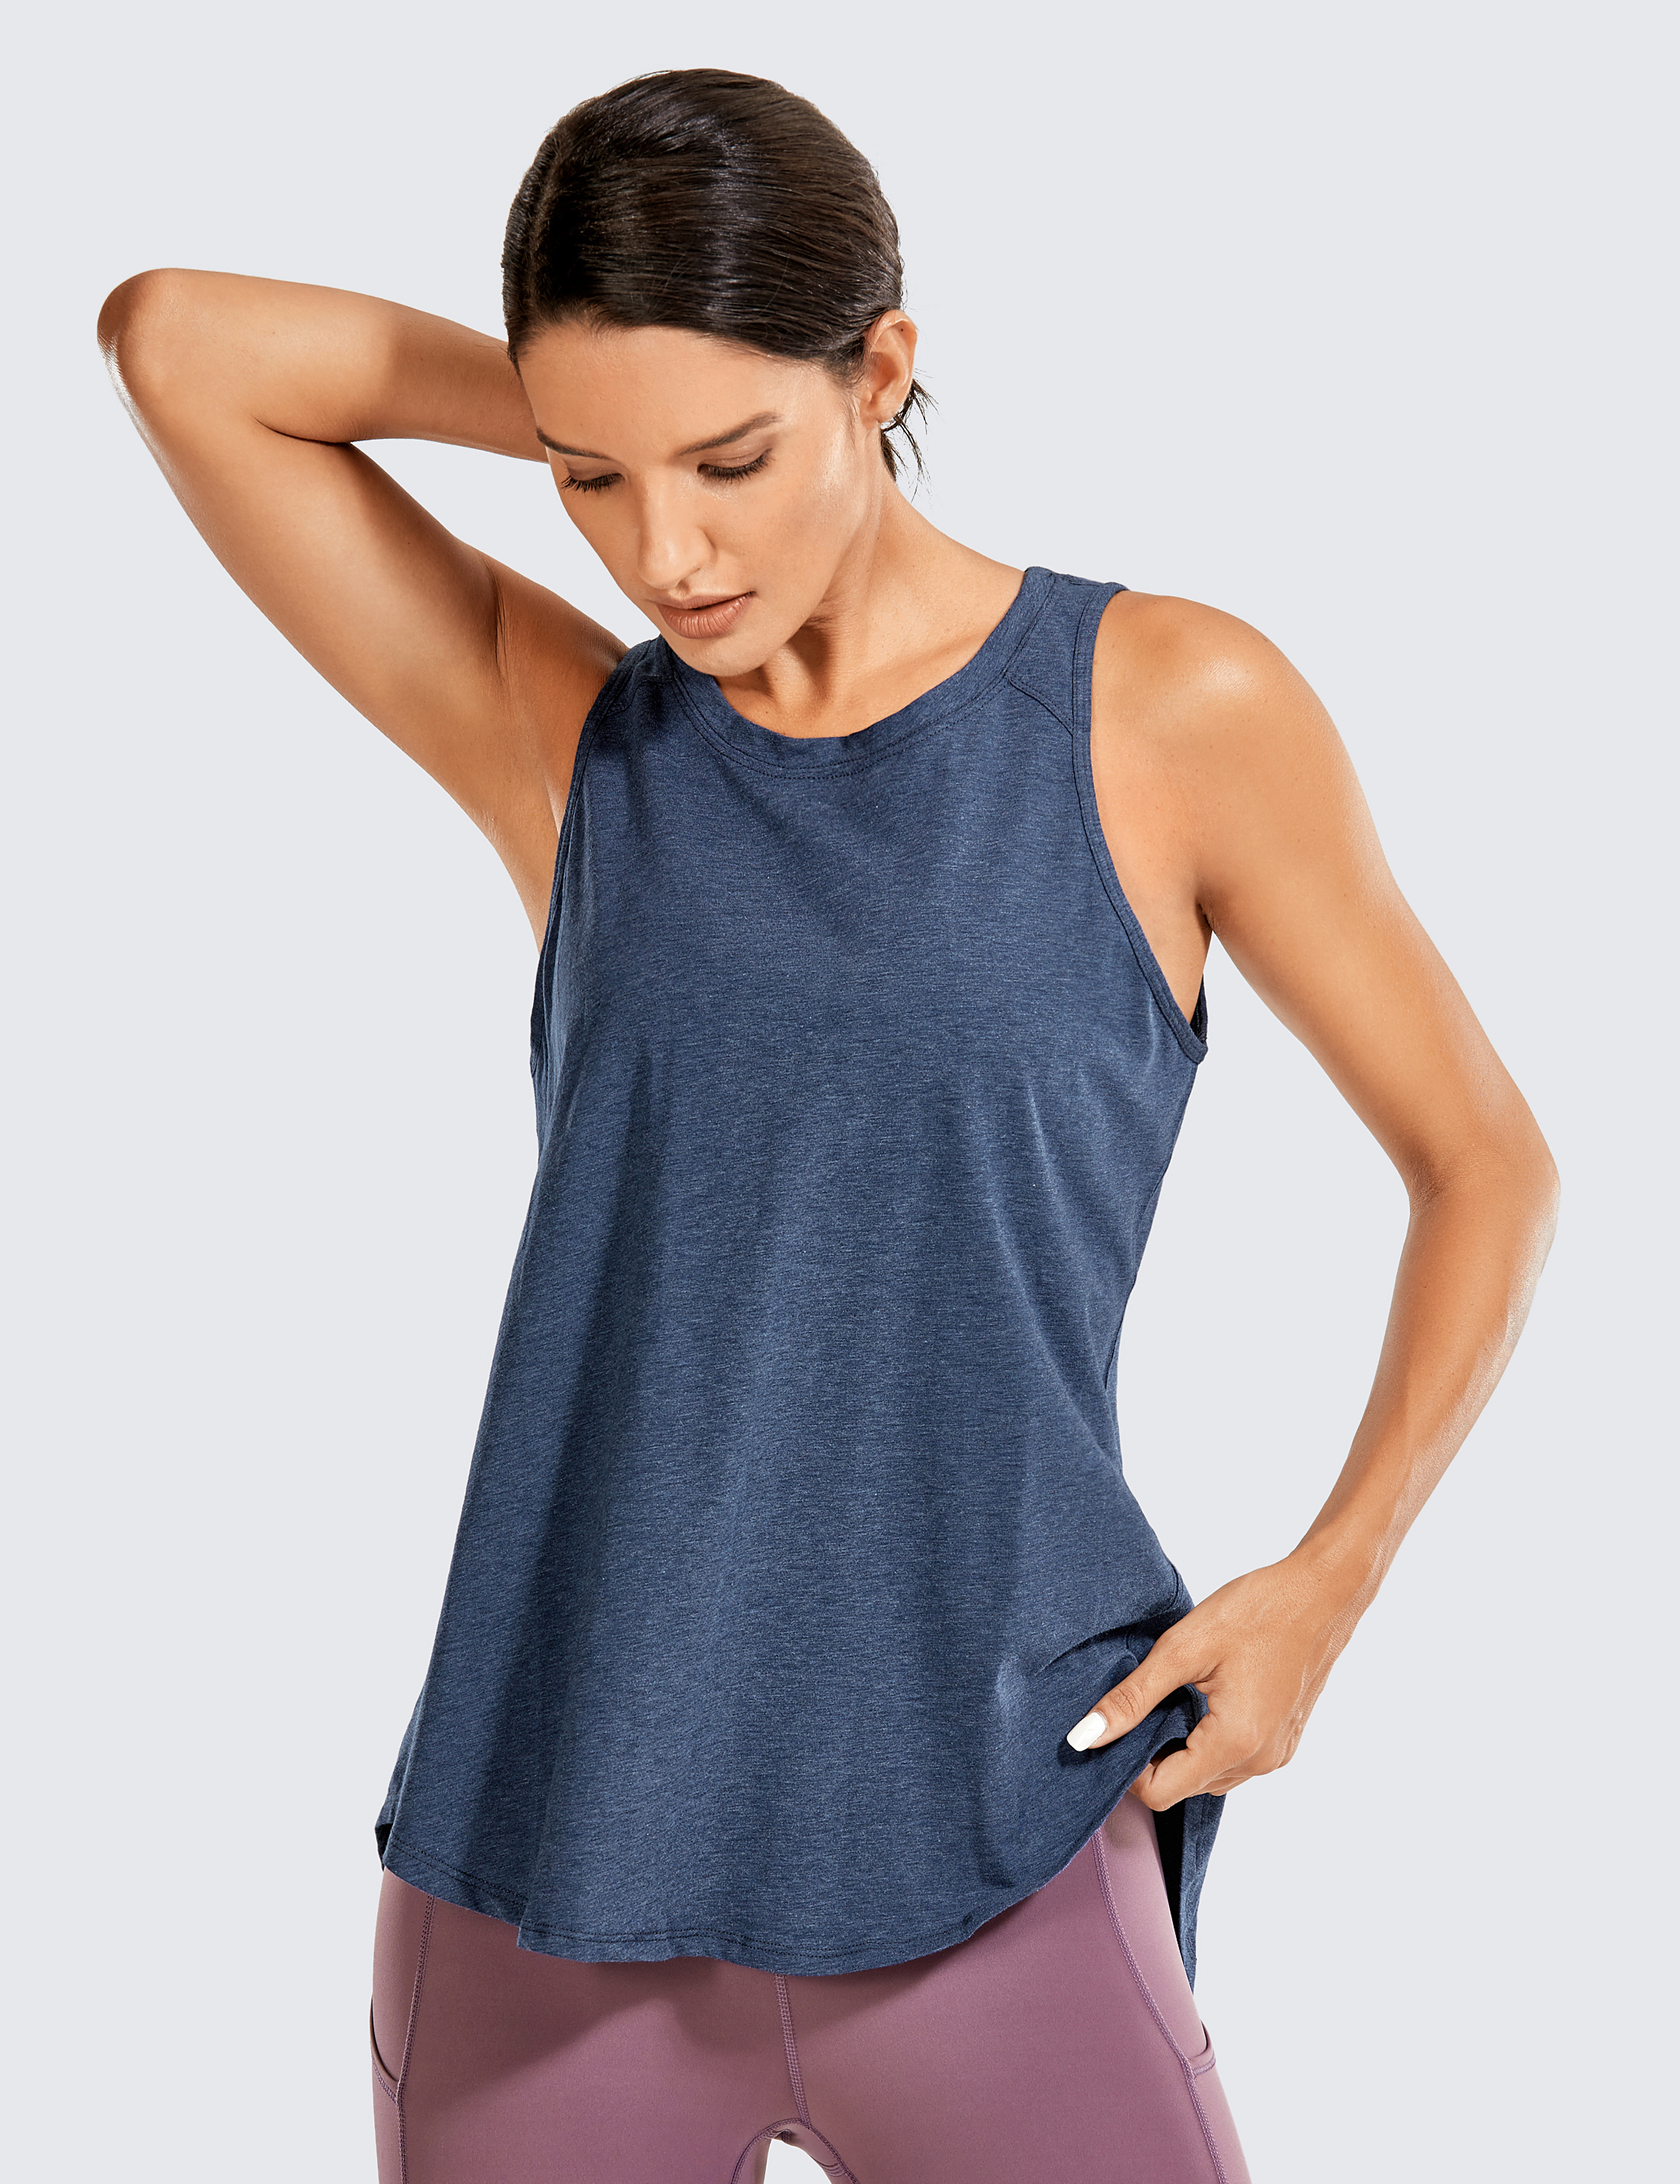 Crz Yoga Women Pima Cotton Sleeveless Shirts Yoga Vest Open Back Sport Tank Tops Ebay